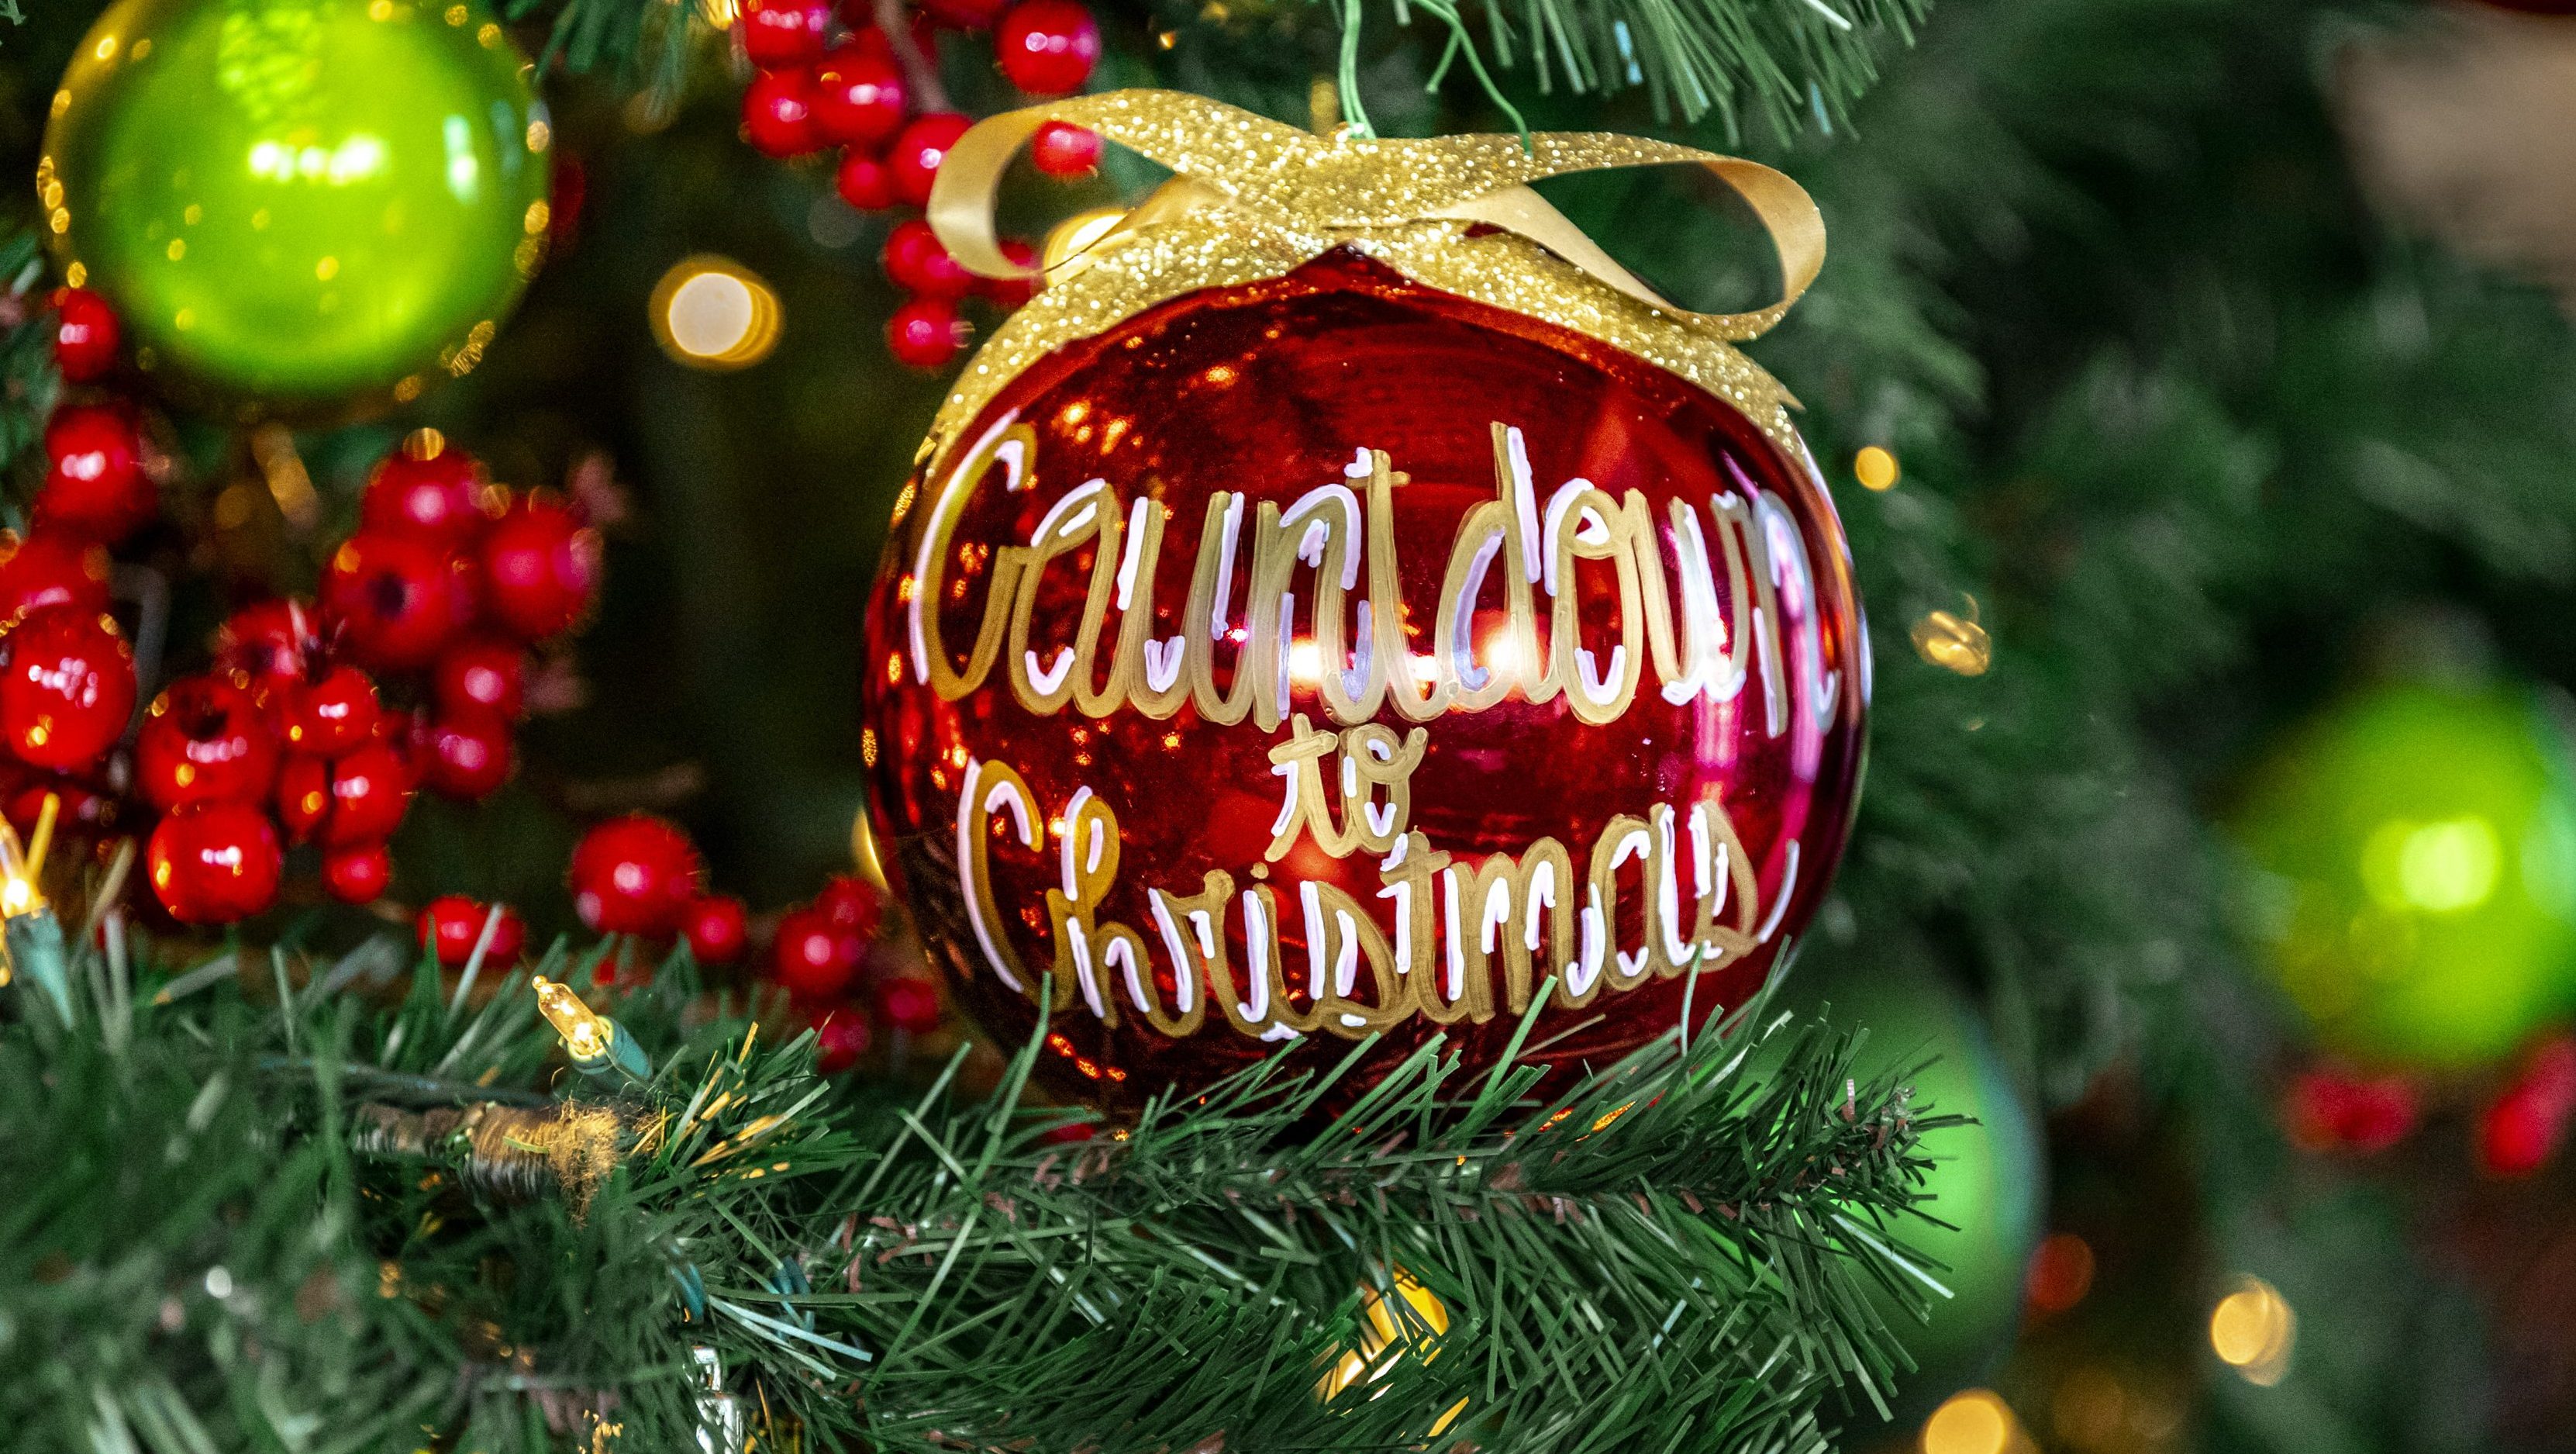 Rukiya Bernard on X: CHRISTMAS TIME IS HERE!!! Tonight!! Who's